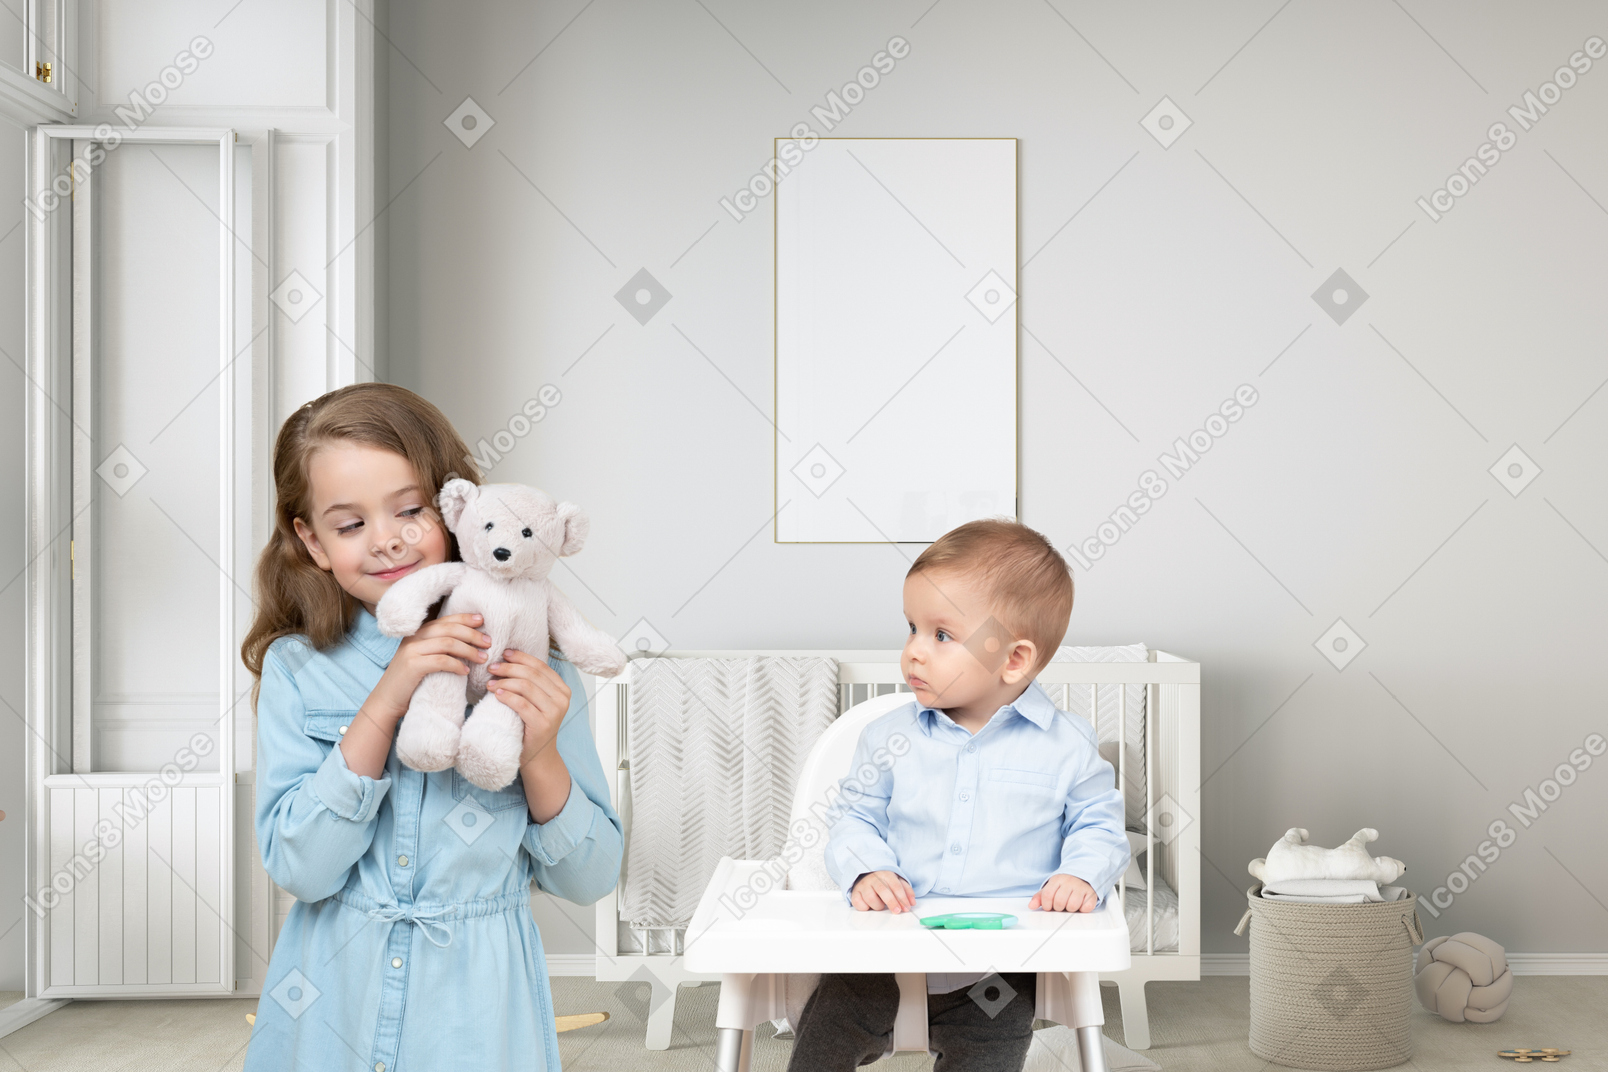 Baby boy looking at his elder sister